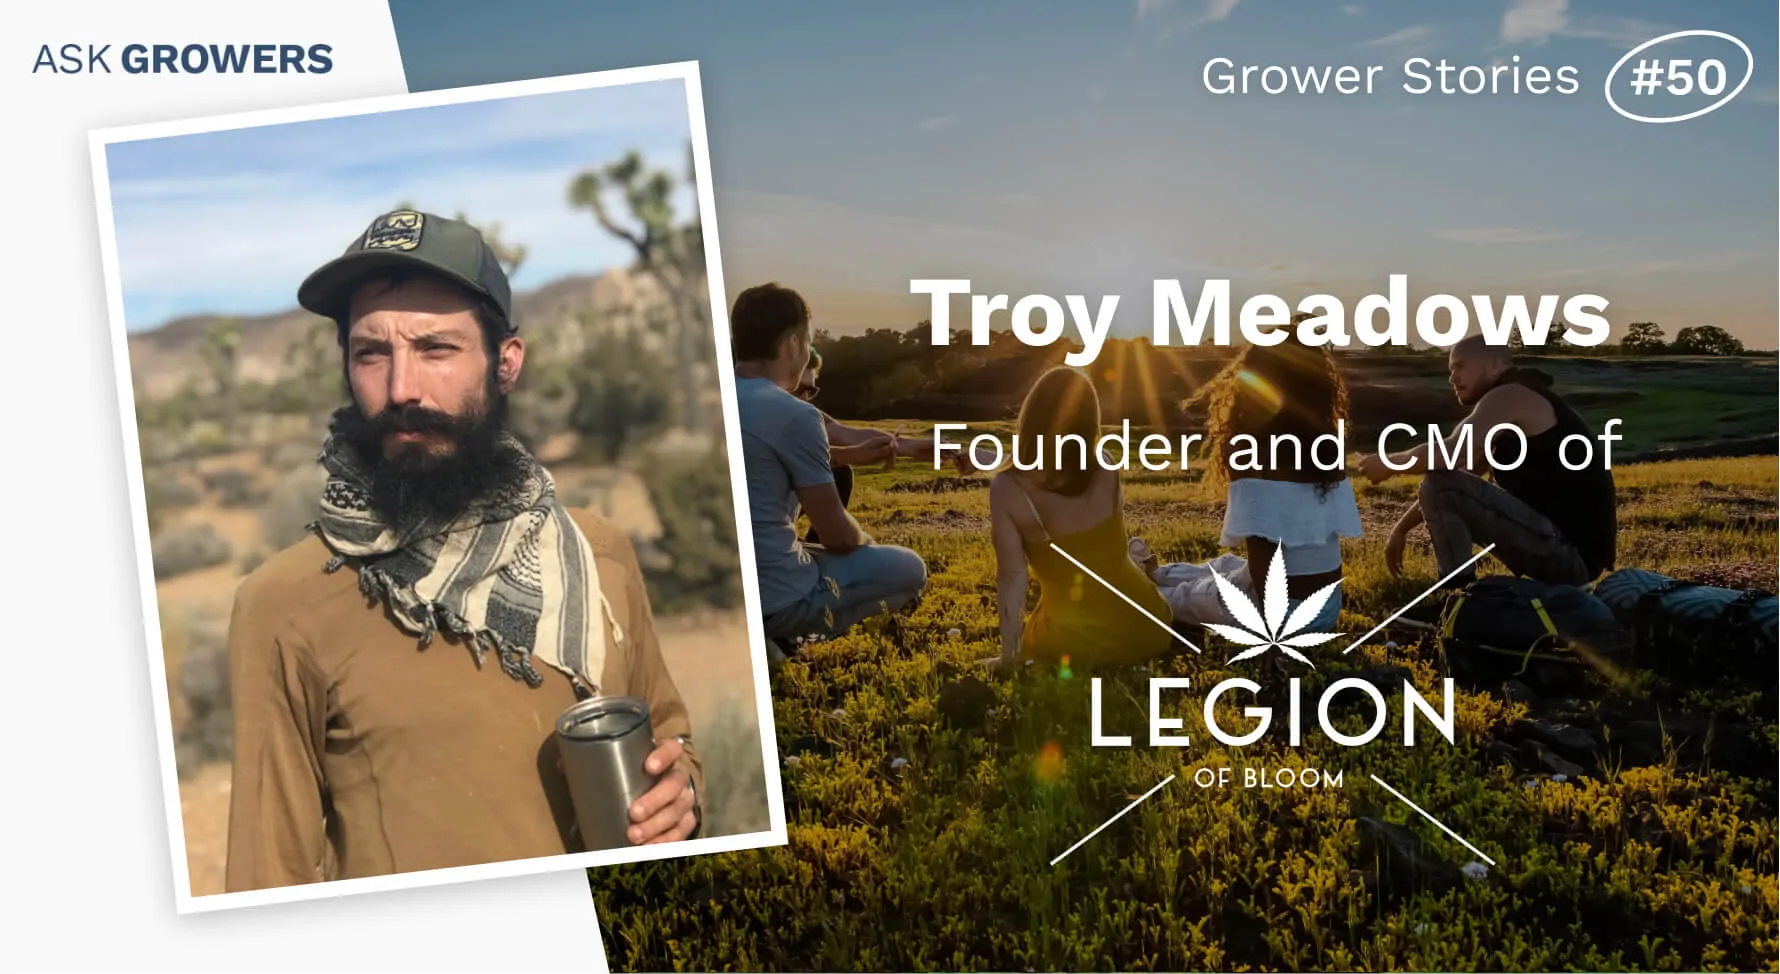 Grower Stories #50: Troy Meadows